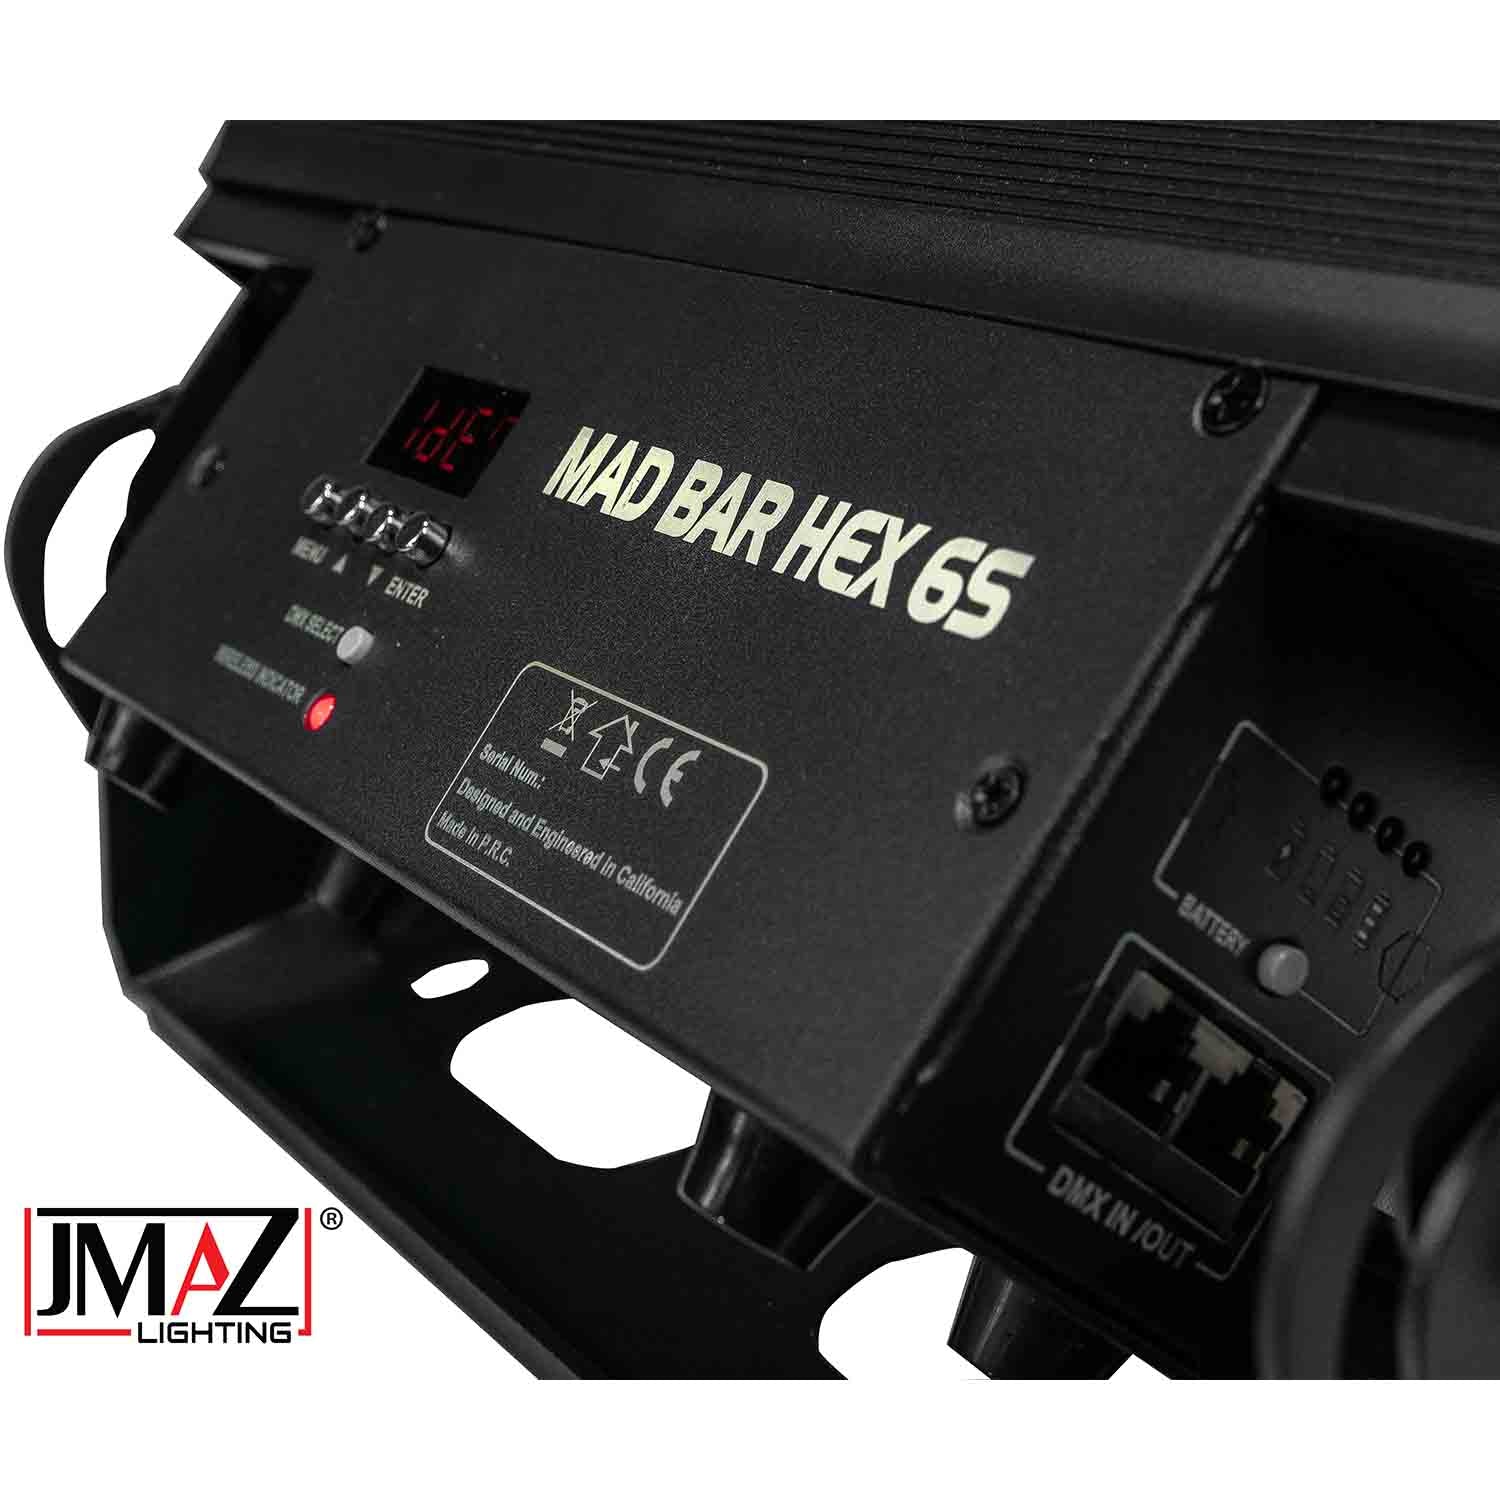 JMAZ JZ1009, Mad Bar HEX 6S 72w Battery Powered Linear Fixture with 6 HEX (RGBWA+UV) LEDs JMAZ